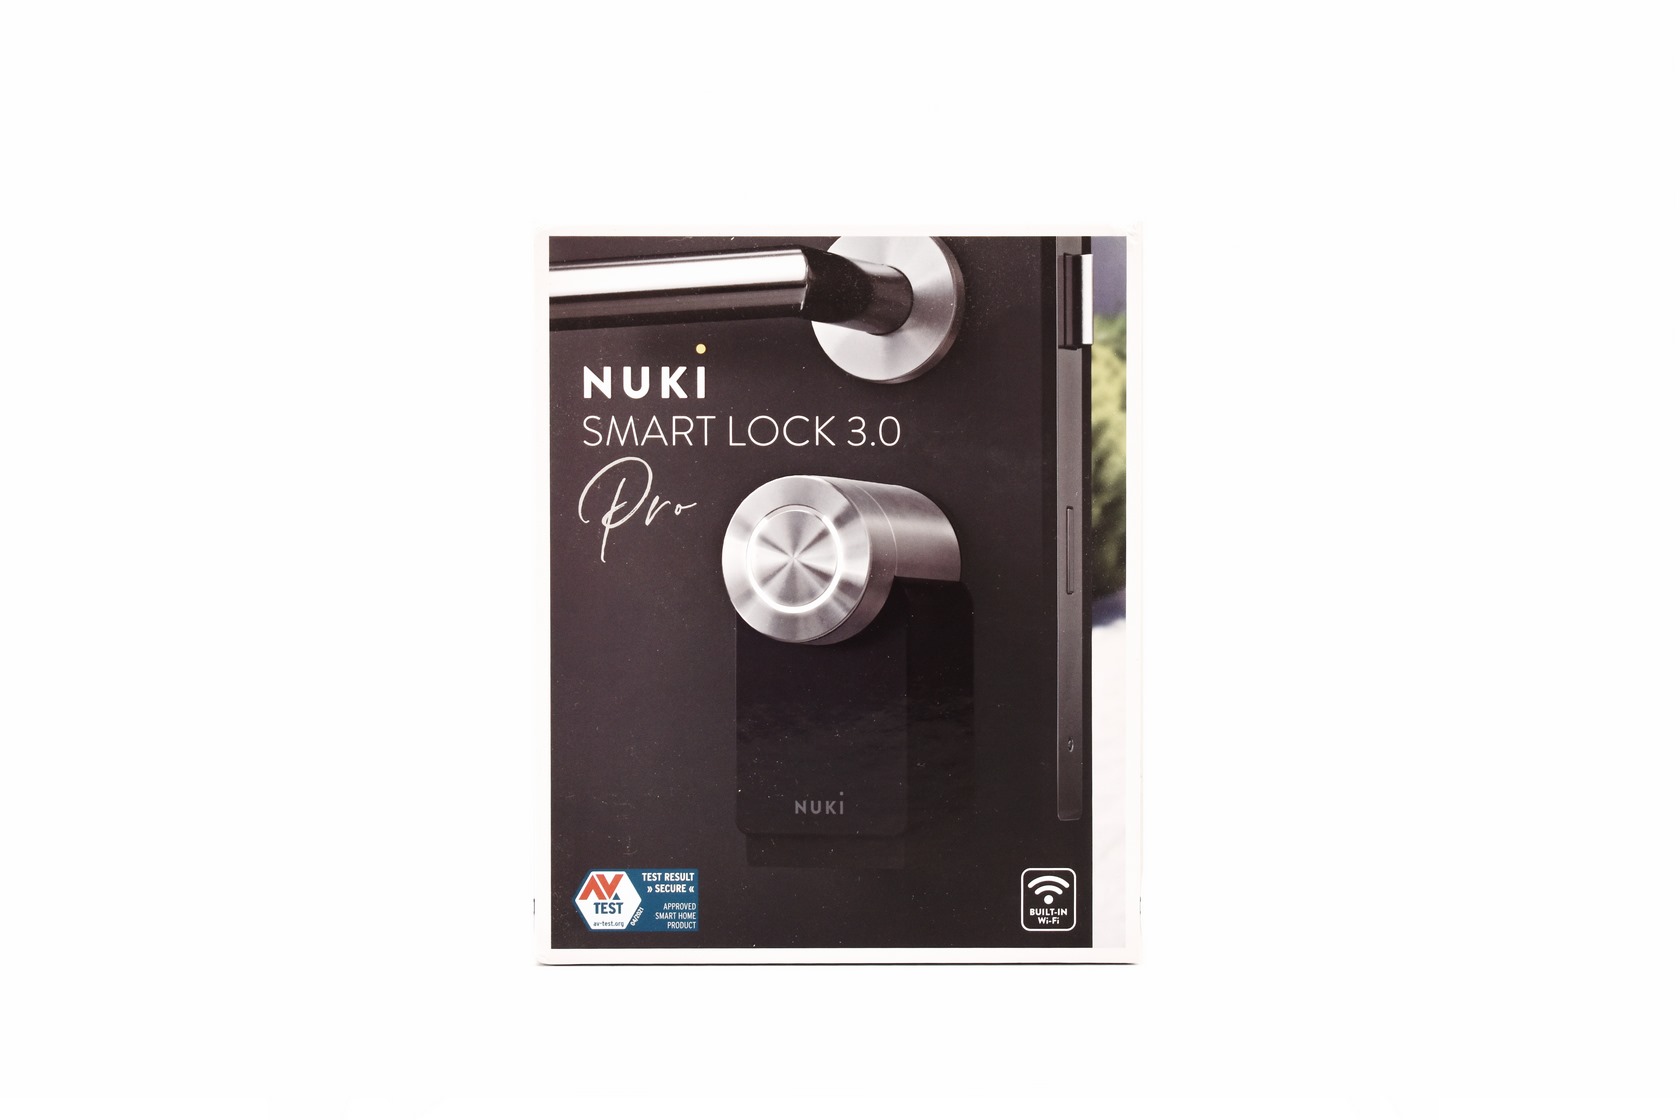 Nuki Smart Lock 3.0 Pro  Contact Nuki Home Solutions GmbH